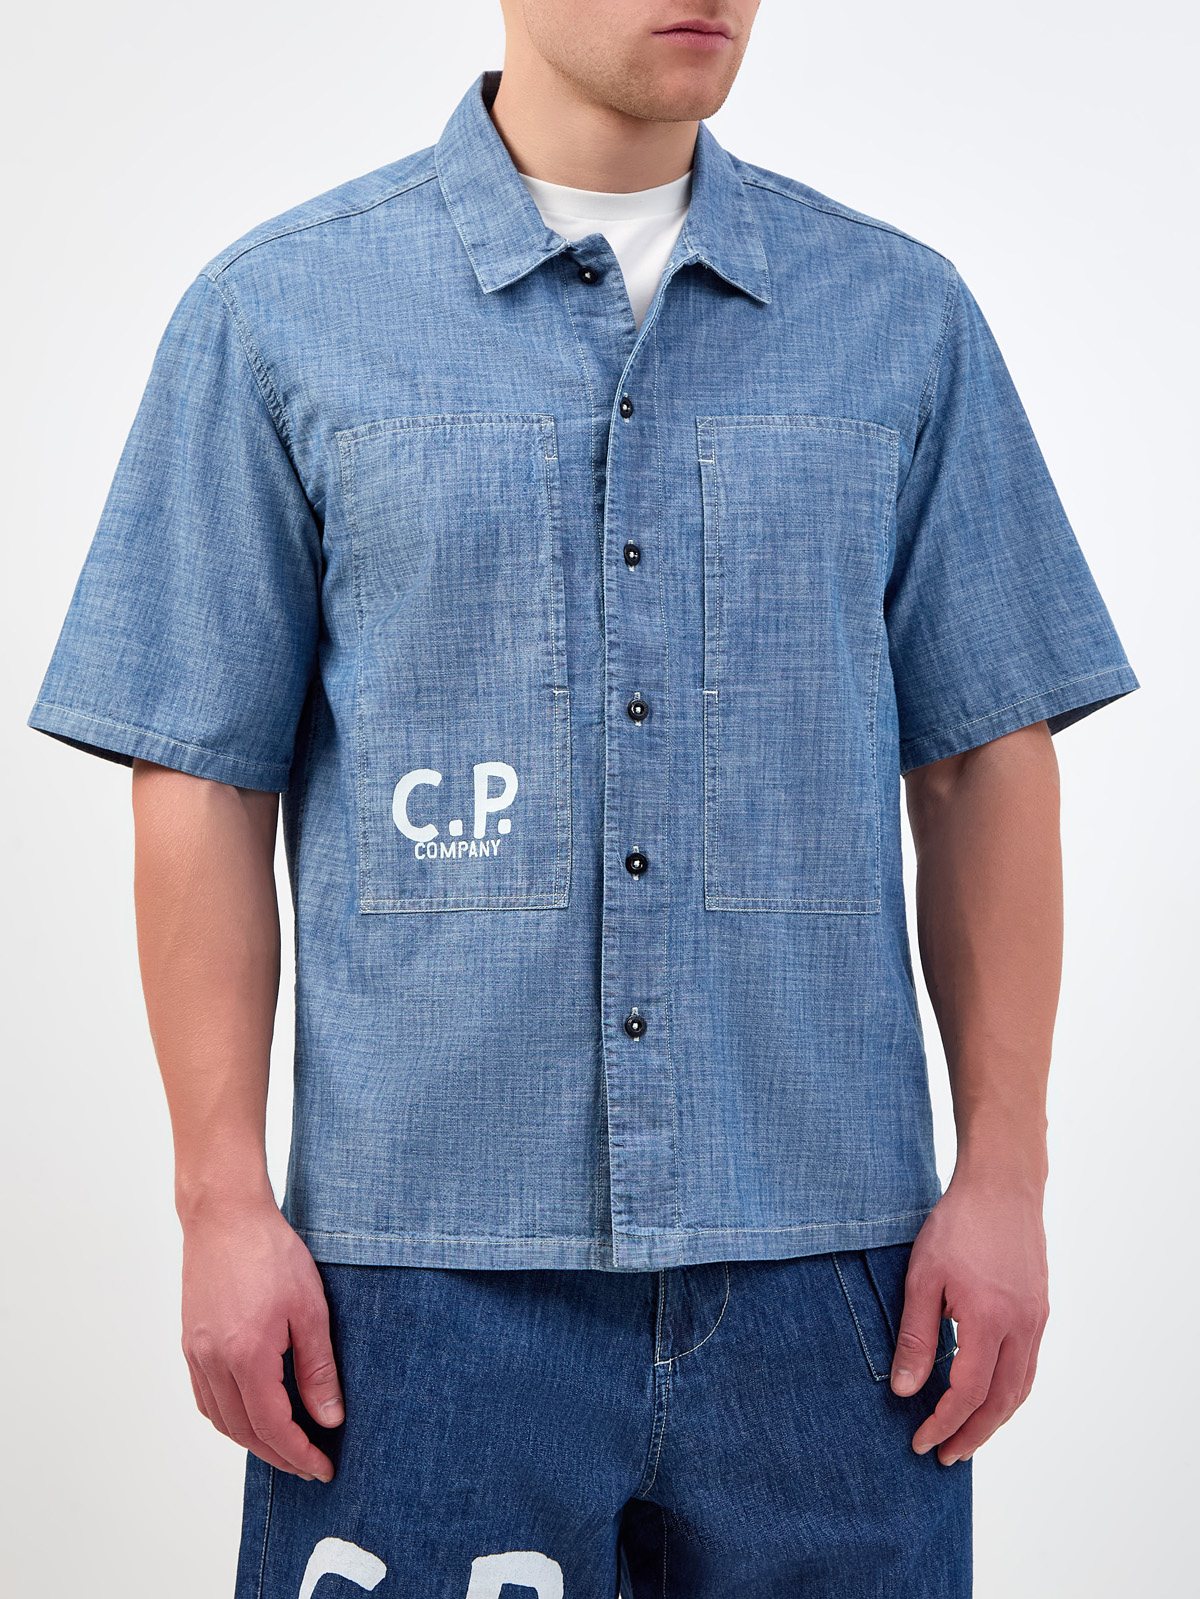 Рубашка из тонкого хлопкового денима Chambray с принтом C.P.COMPANY, цвет голубой, размер M;L;XL - фото 3